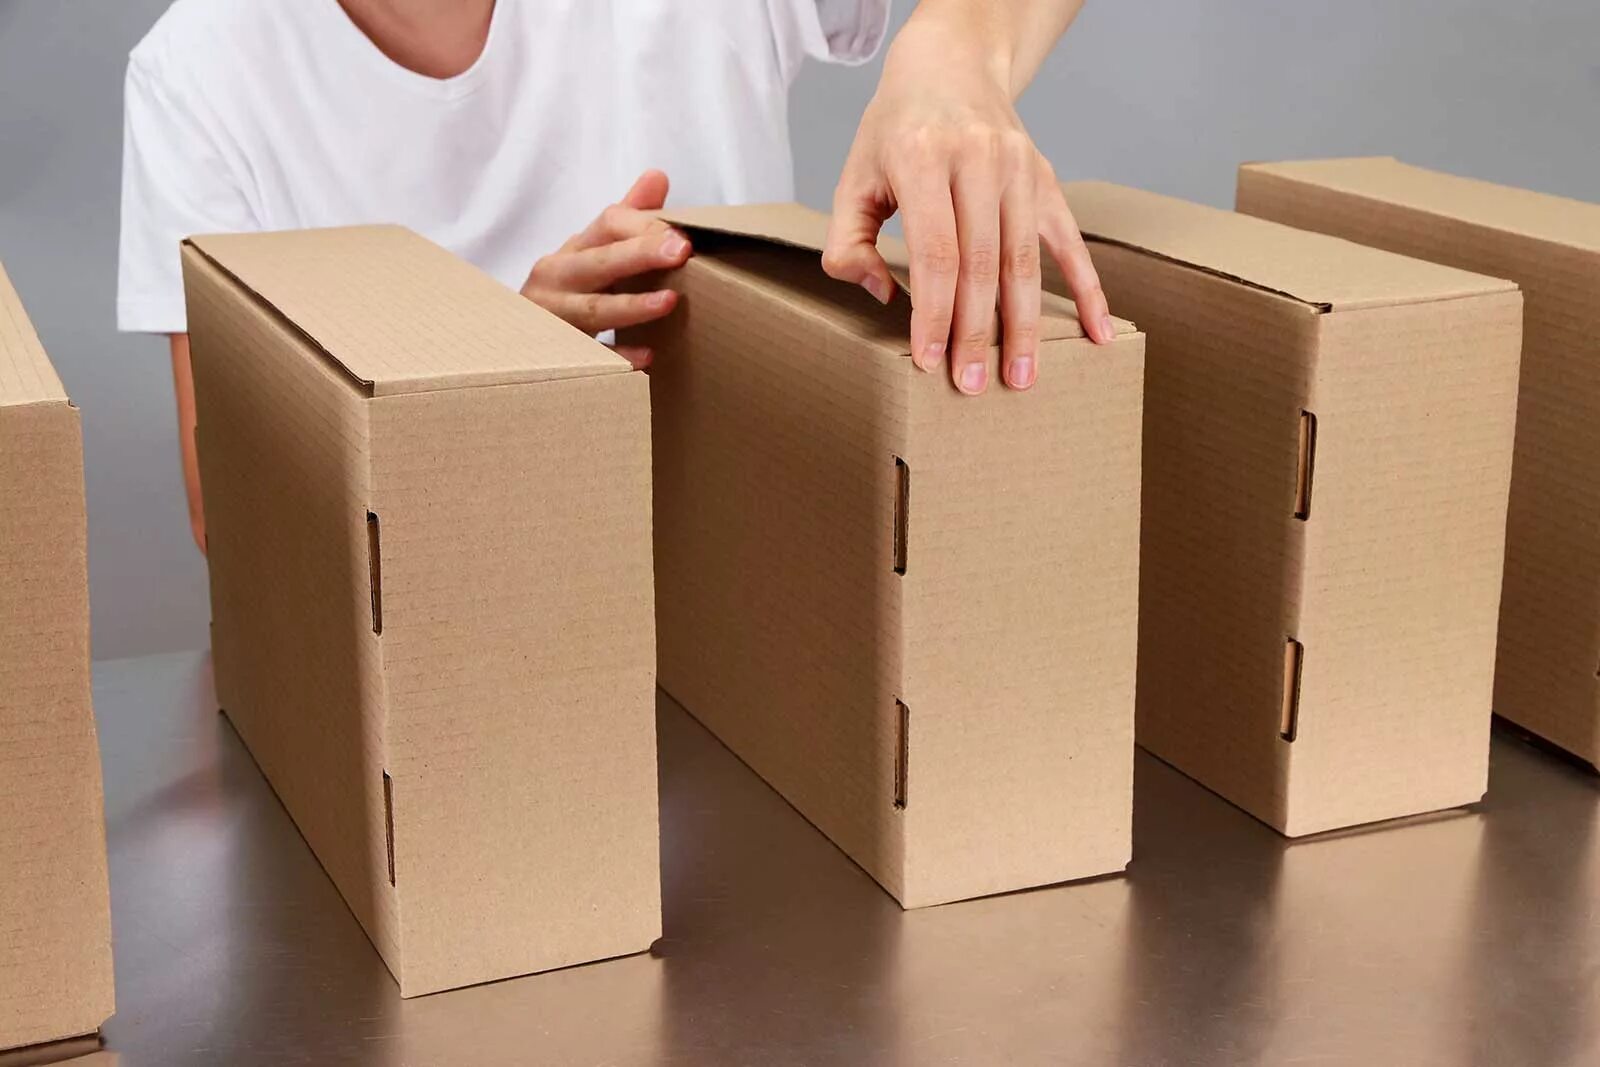 Упаковка товара на вб. Упаковка коробки. Коробки для упаковки товара. Коробки на складе. Картонные коробки склад.